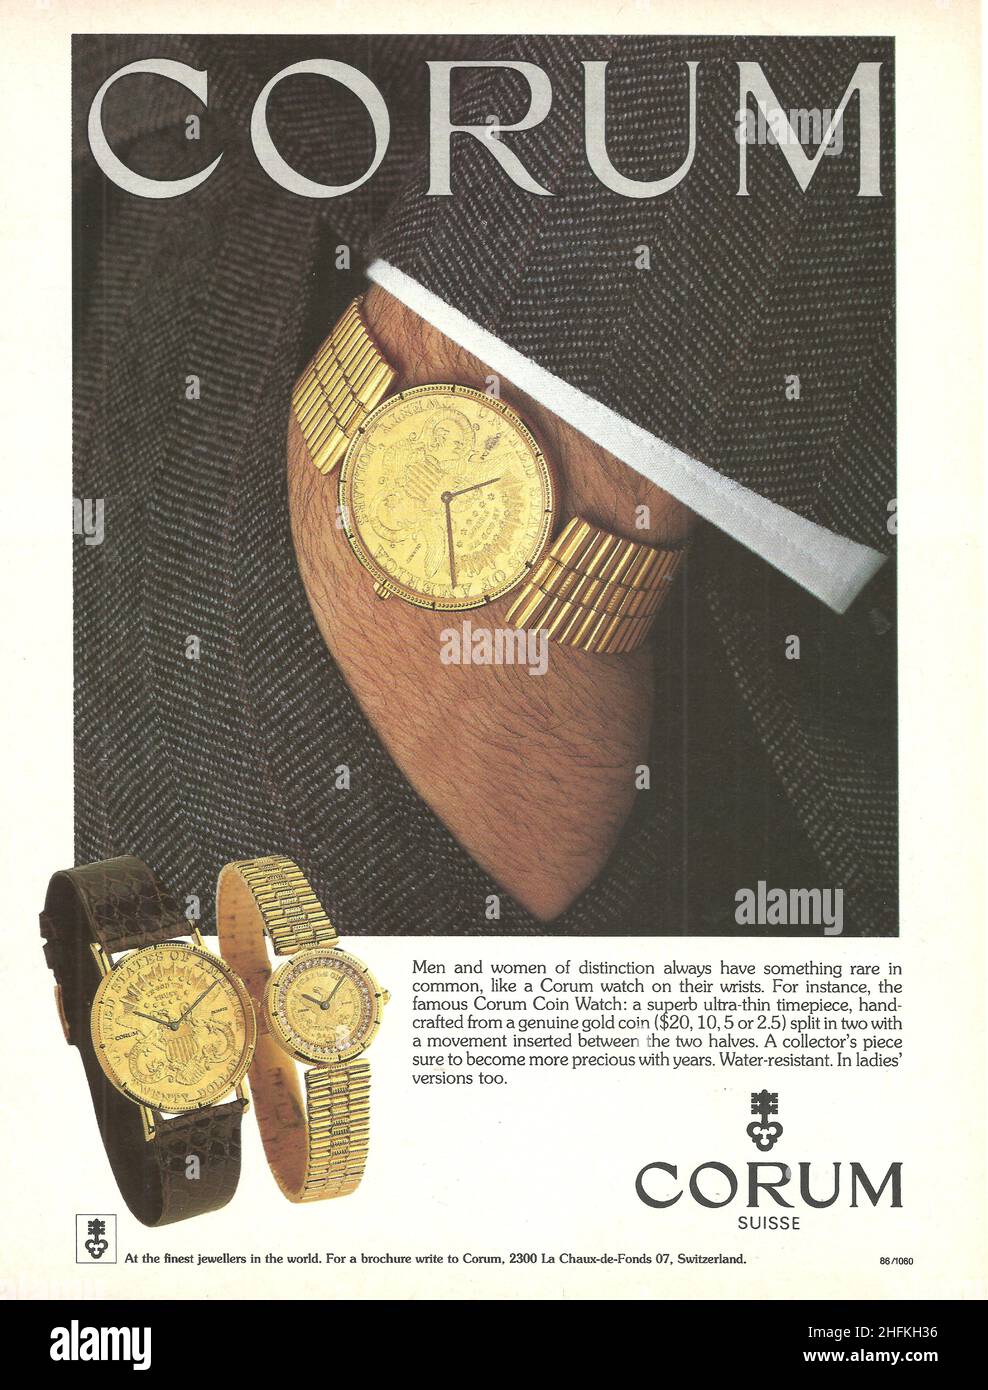 CORUM watch vintage paper advertisement advert 1980s 80s Stock Photo